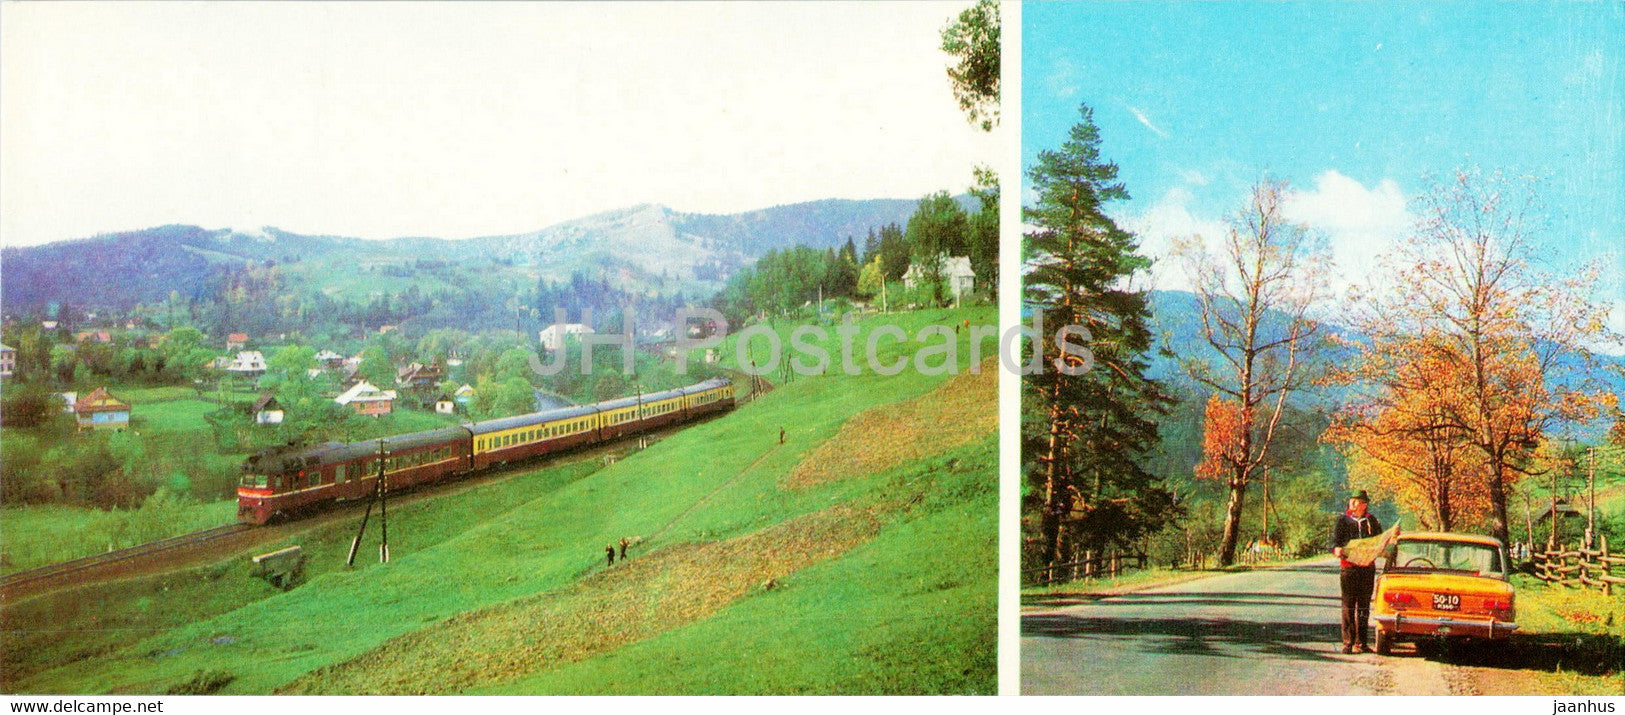 Vorokhta village - Carpathian roads - train - railway - car Zhiguli - Hutsul Region - 1980 - Ukraine USSR - unused - JH Postcards